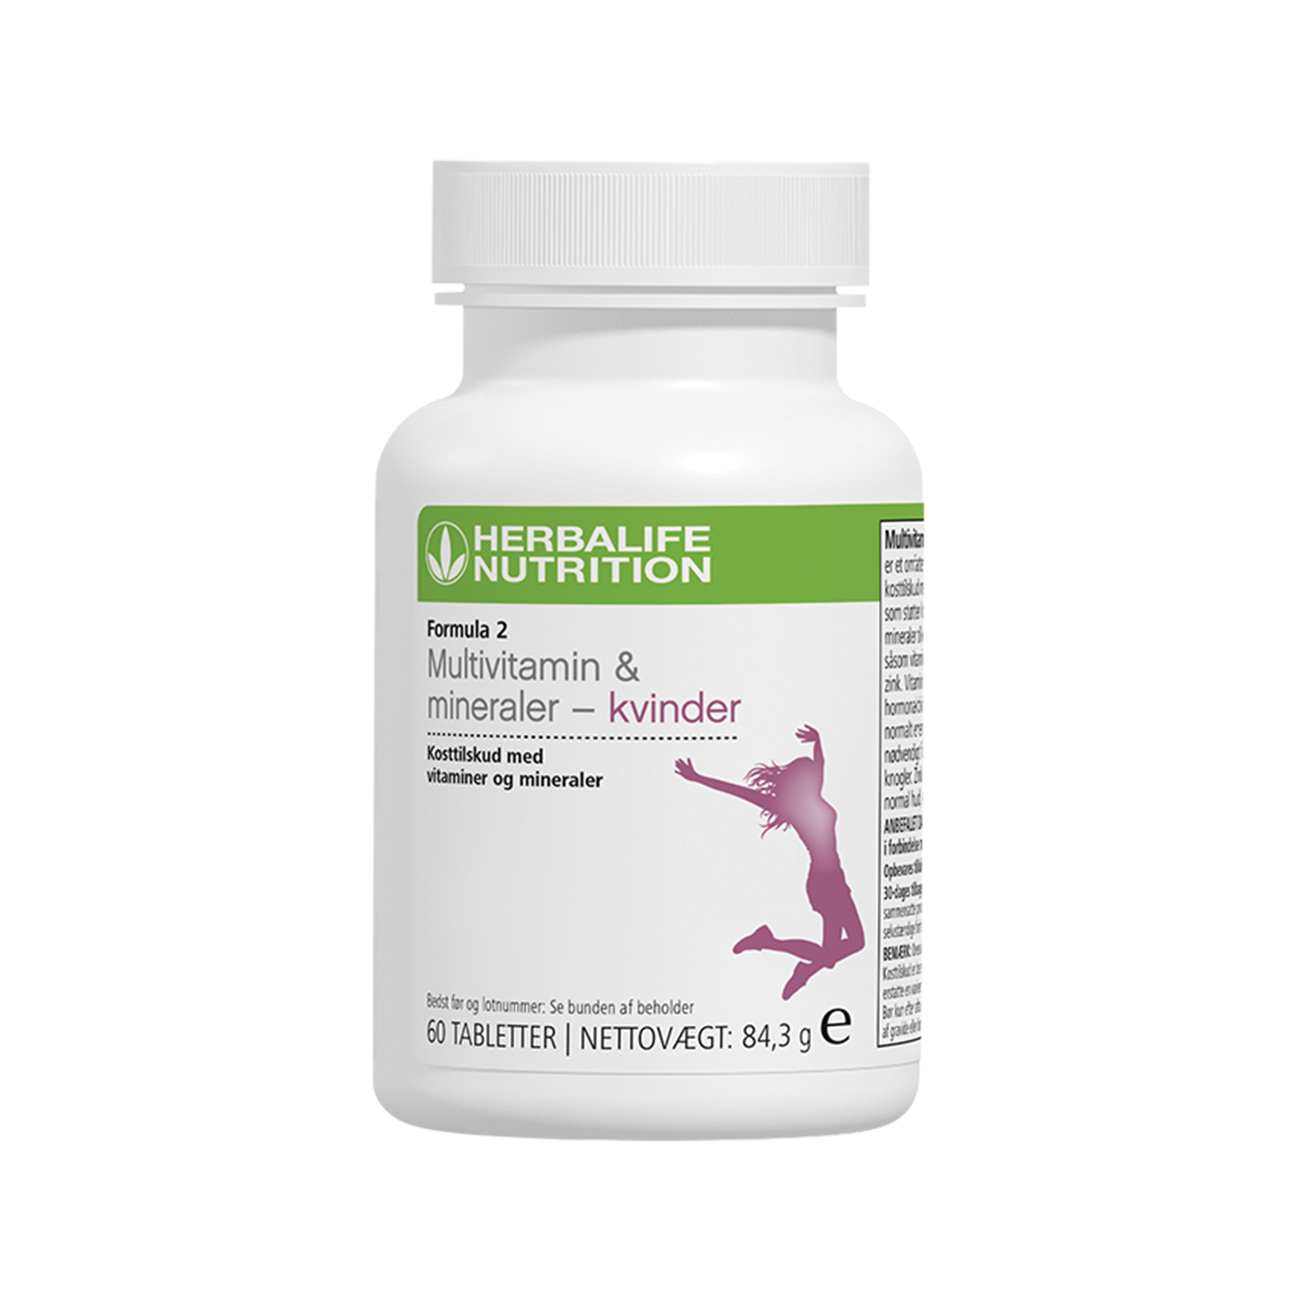 Formula 2 Vitamin & Mineral Complex Women Multivitamintilskud produkt